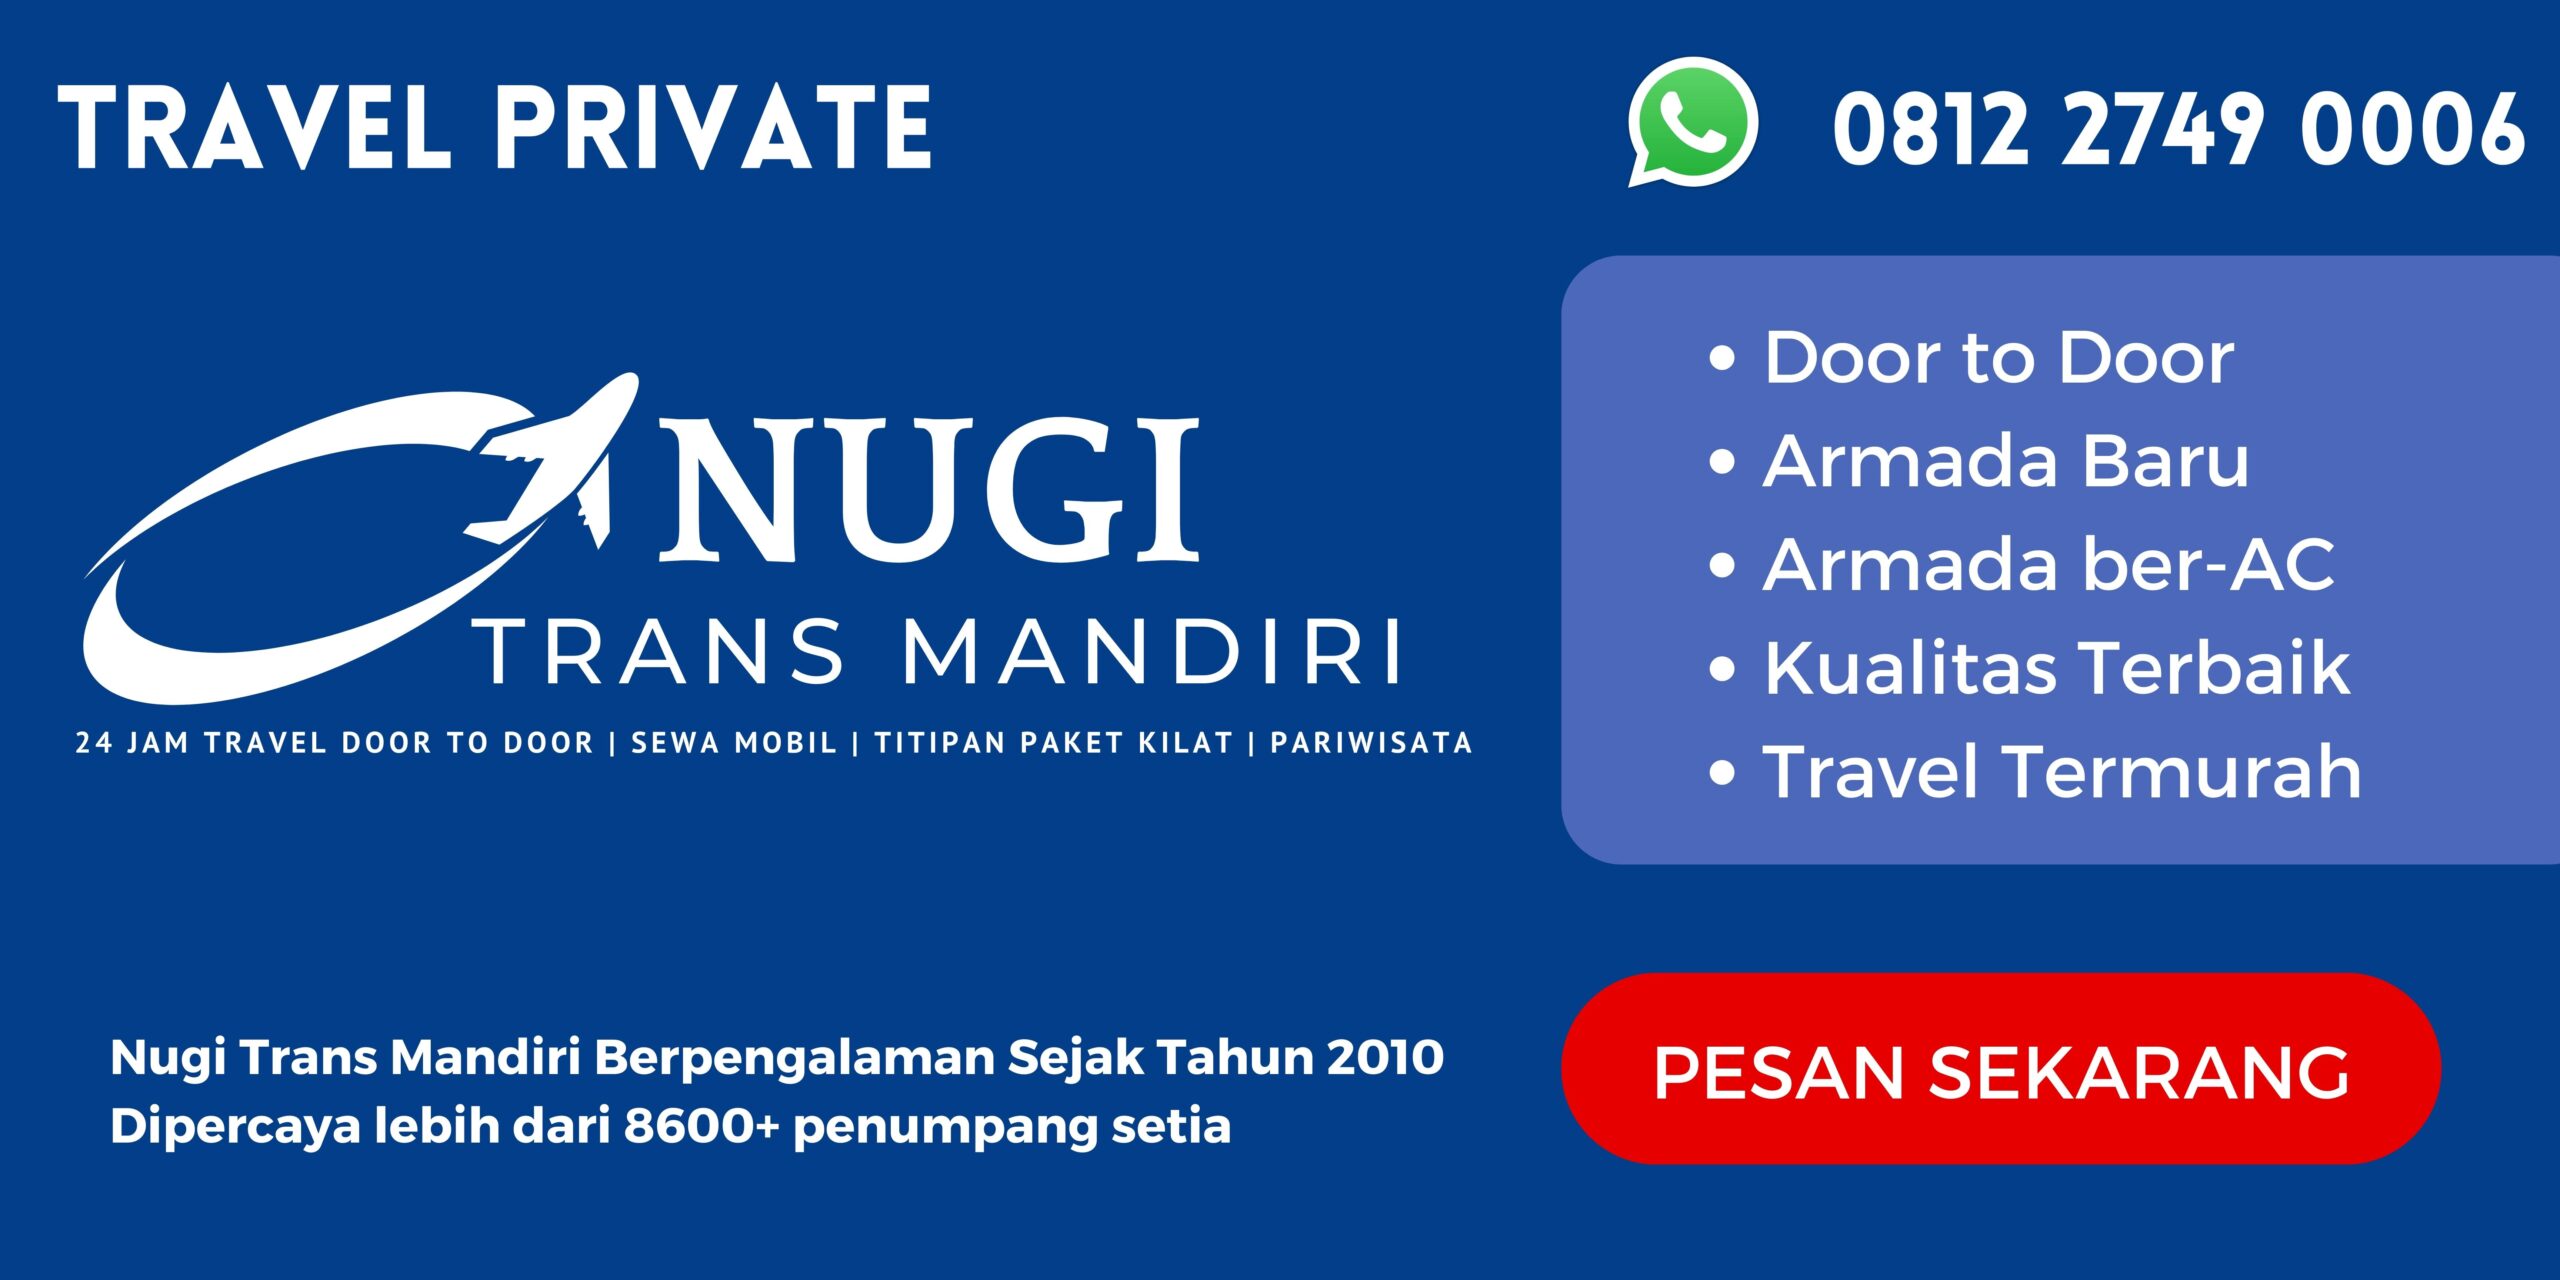 Travel Private - Banner Nugi Trans Mandiri